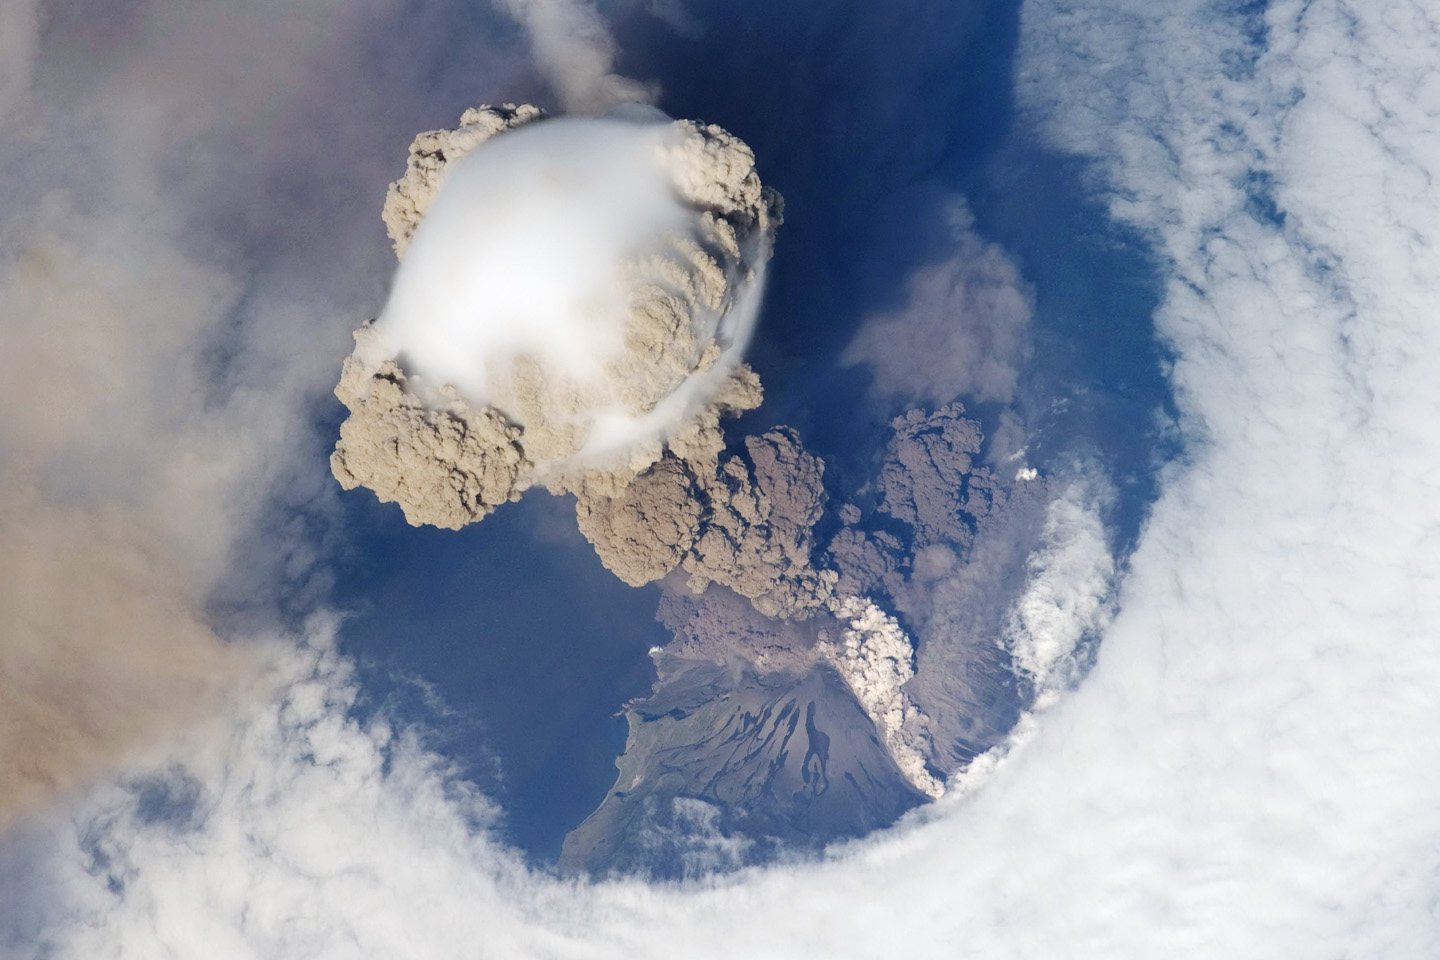 Saryshev Eruption Image - Image Credit: 